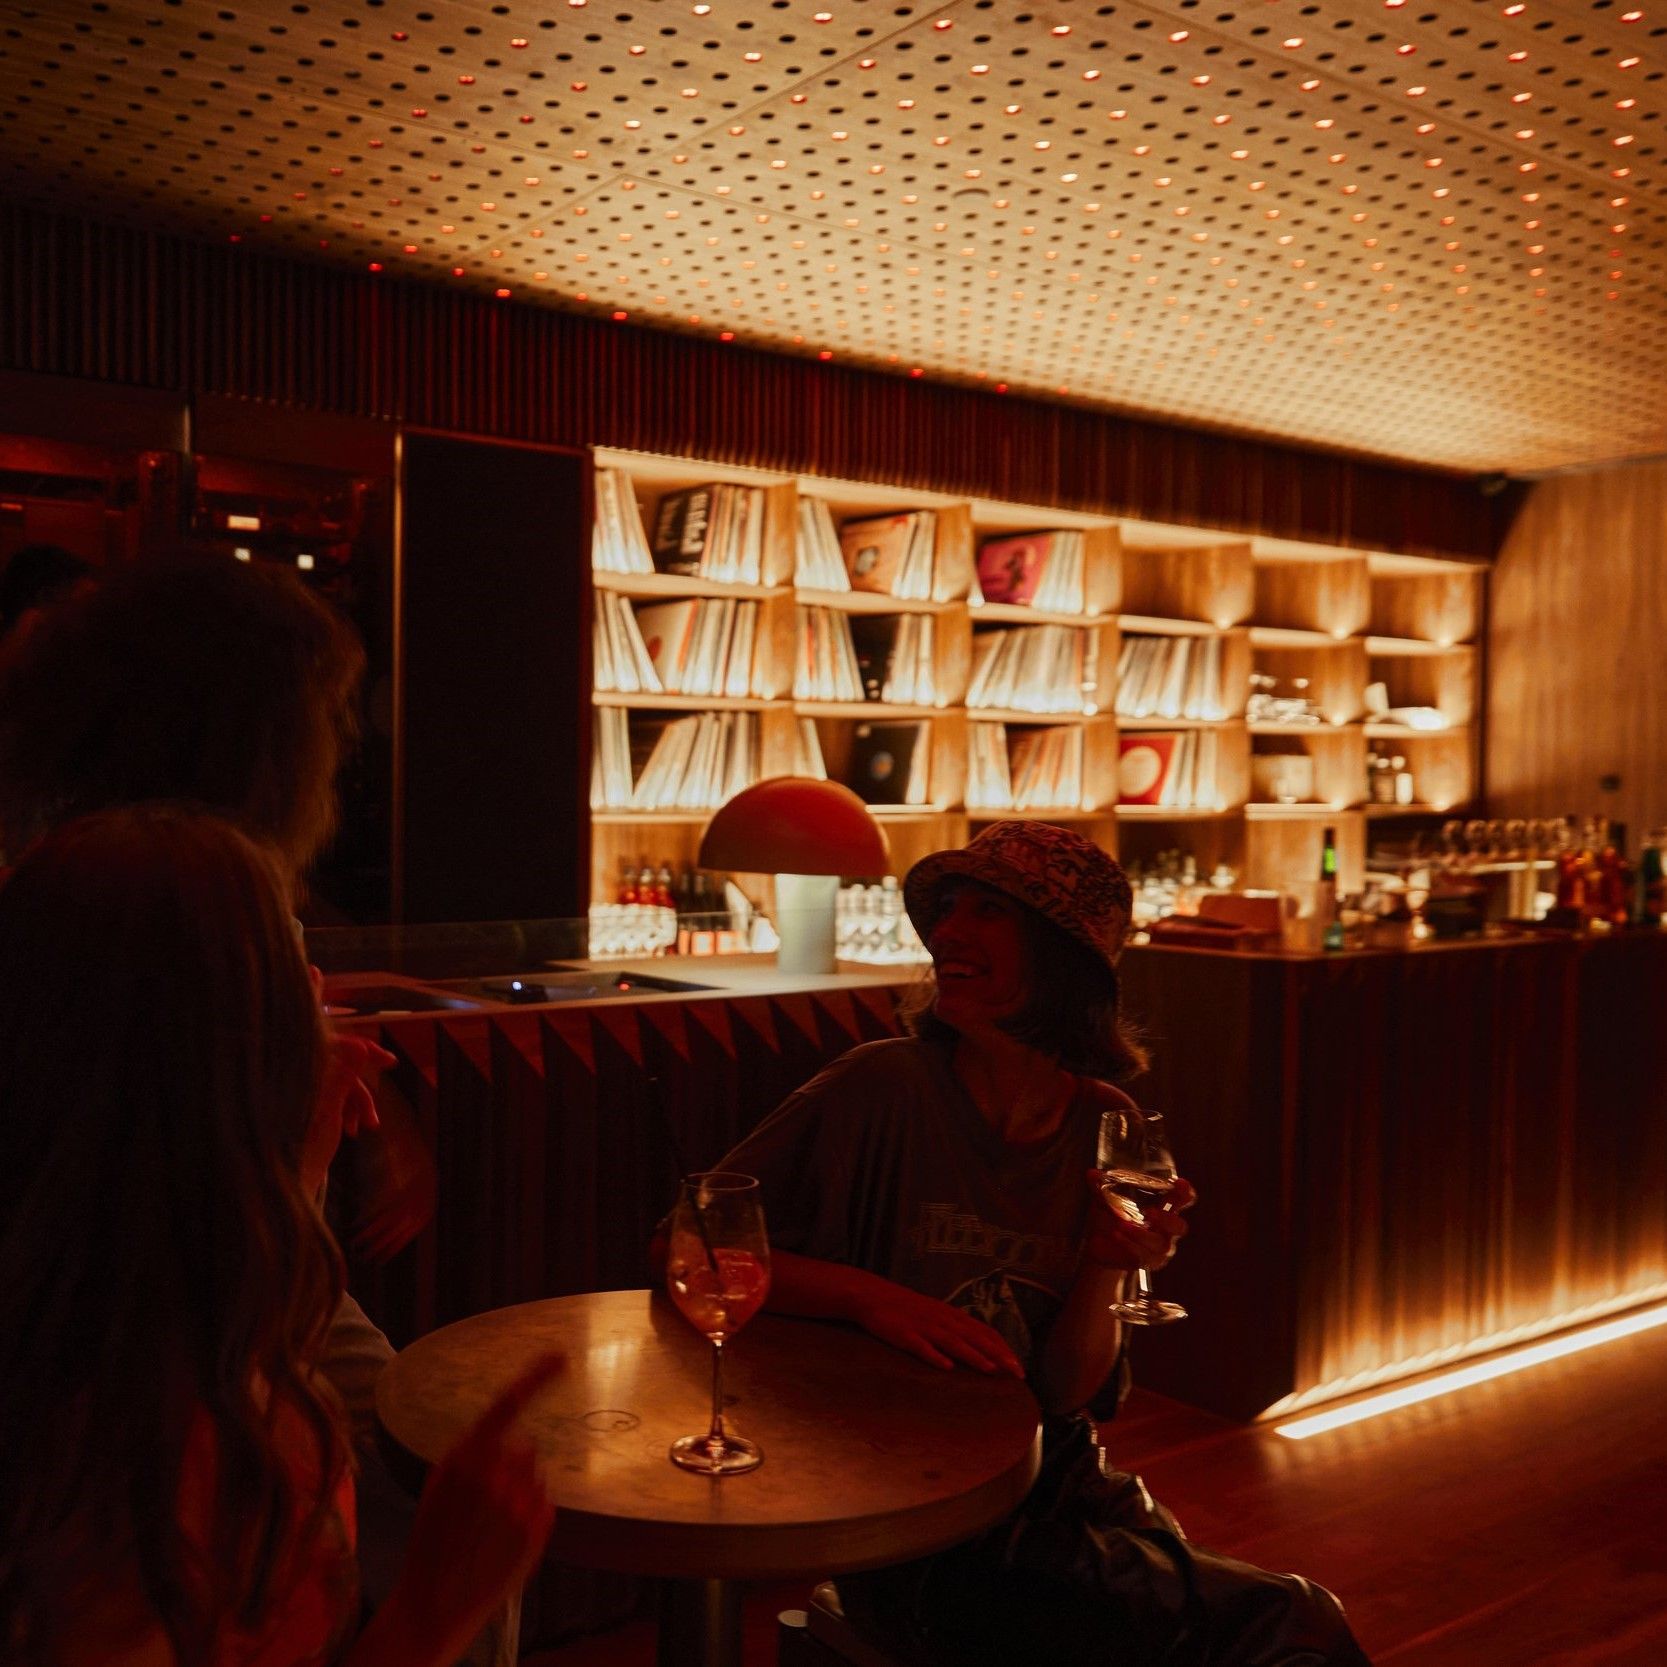 Girls drinking wine in dimly lit bar